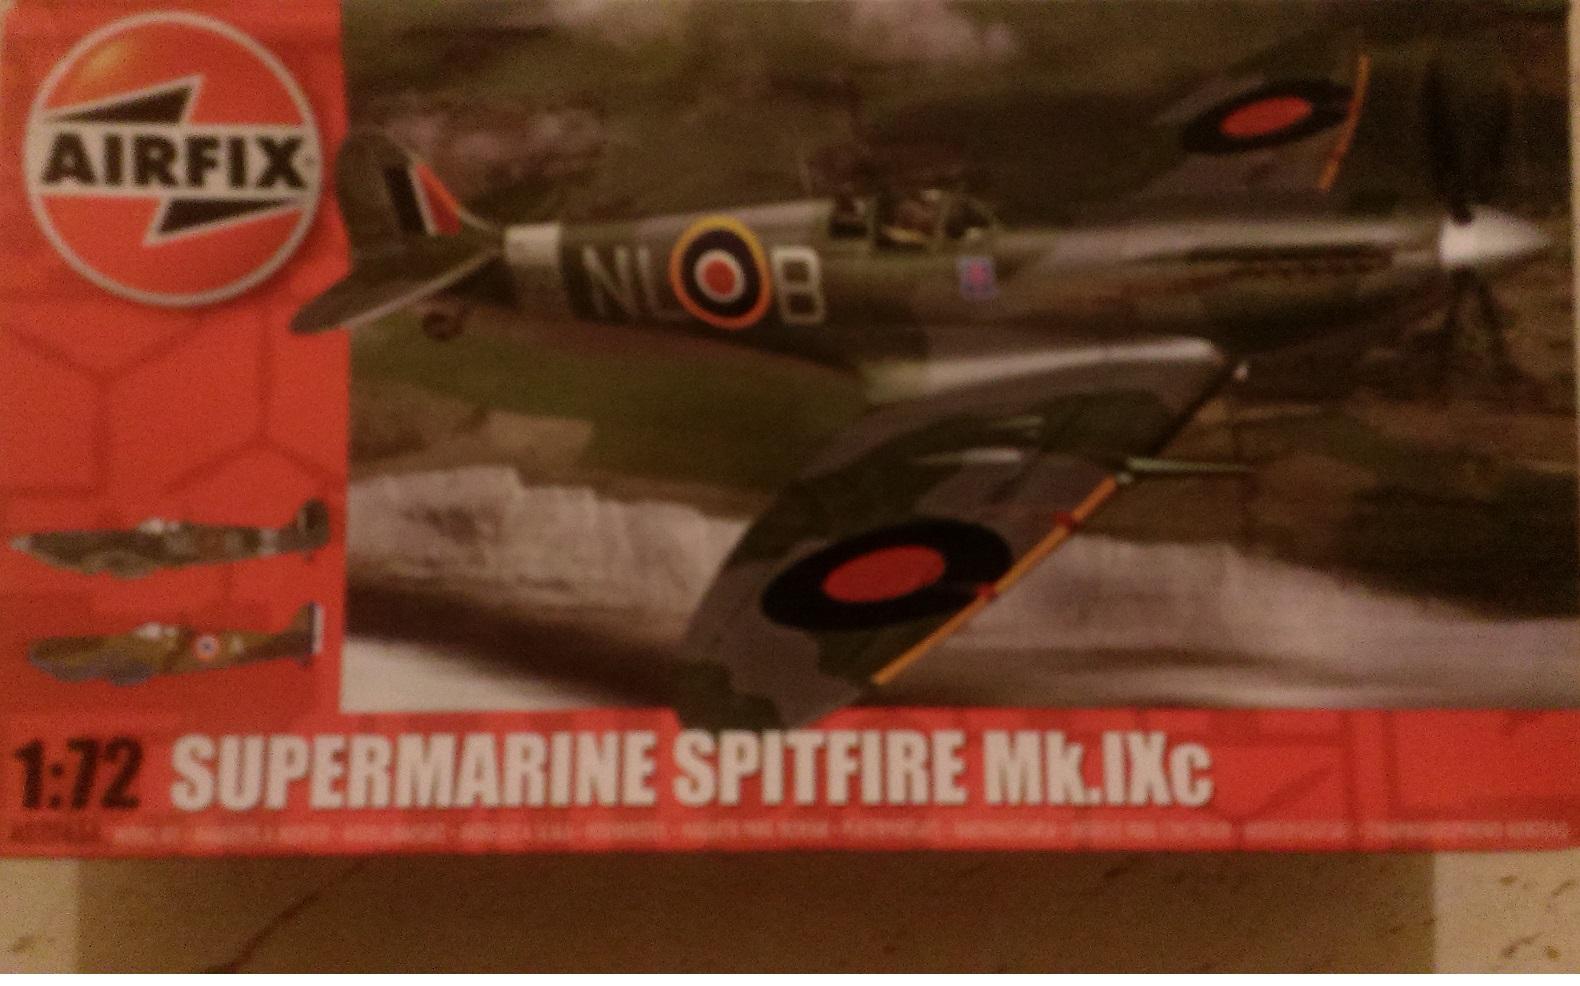 Airfix Spitfire Mk. IXc 1-72

1500.-